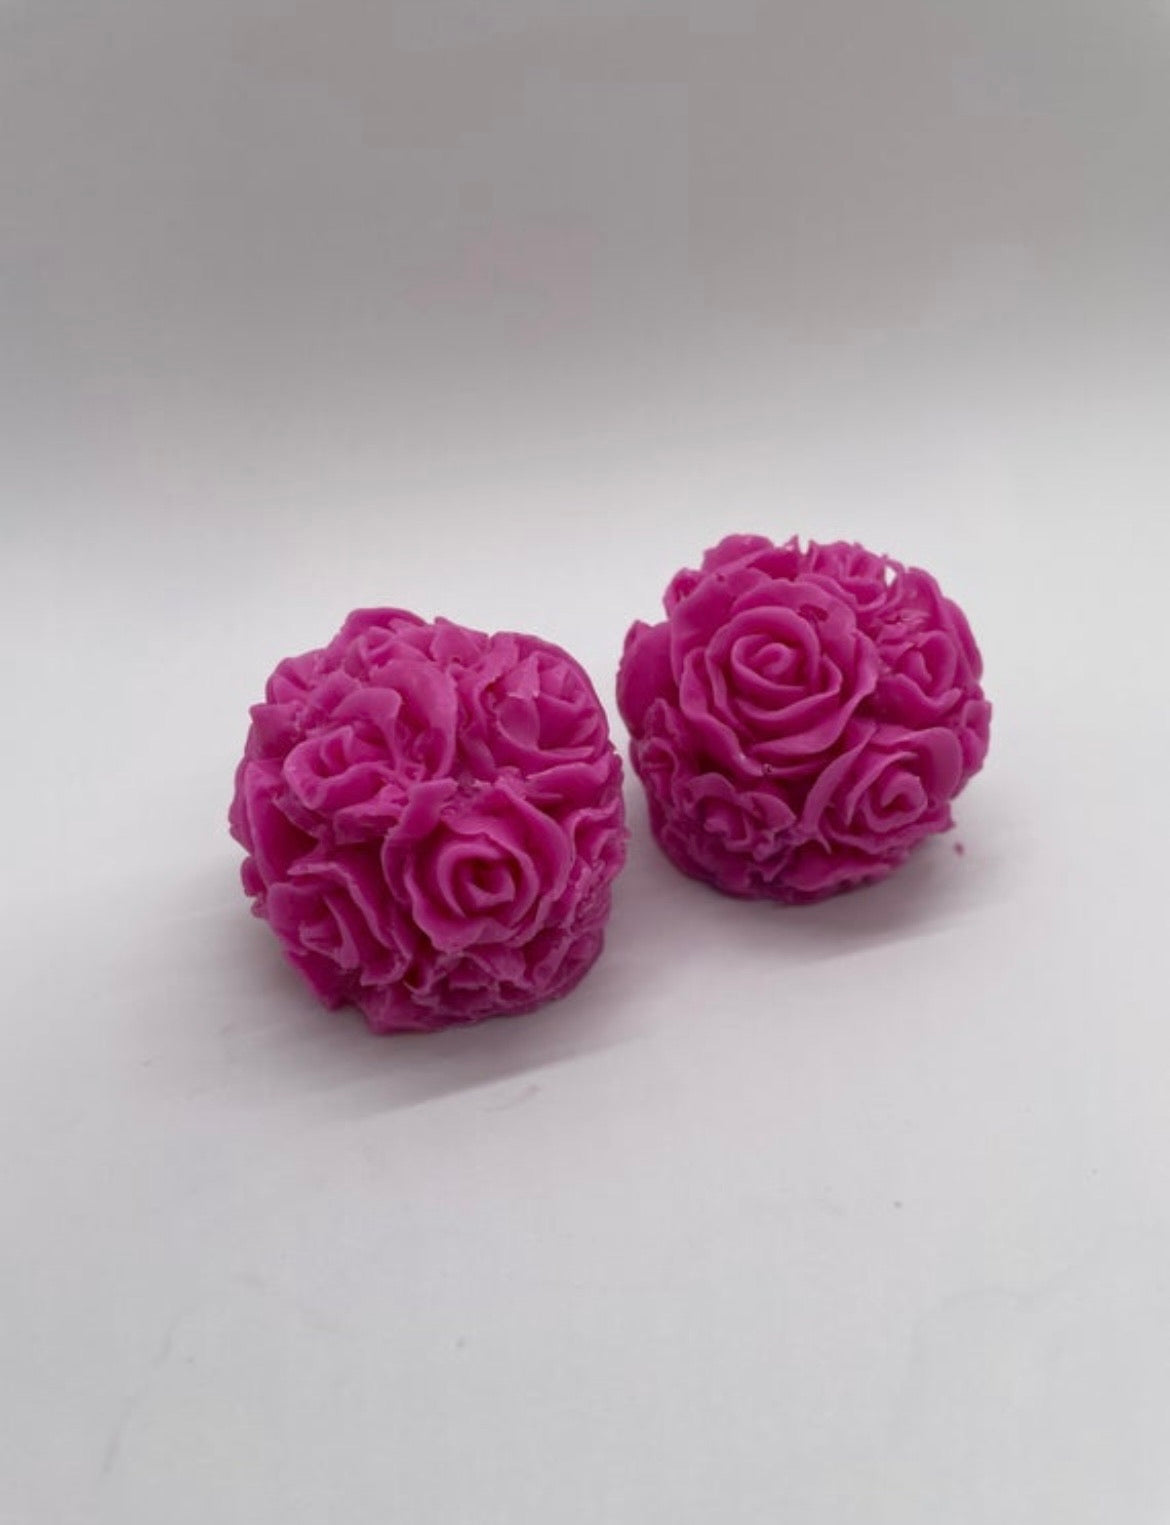 Rose Bouquet Soap 2 pk VARIES IN COLORS